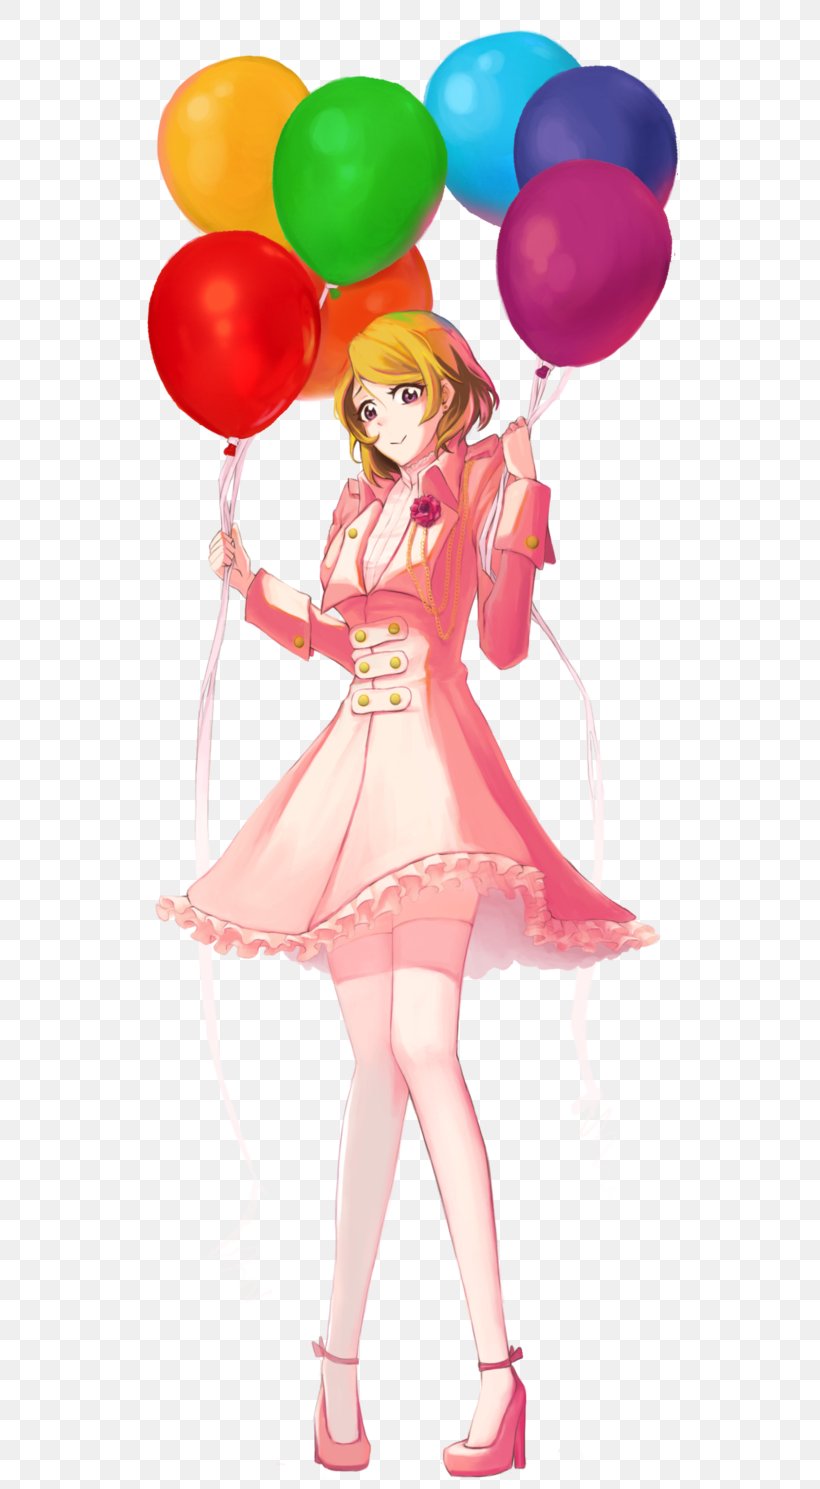 Balloon Cartoon Pink M Character, PNG, 536x1489px, Balloon, Cartoon, Character, Clown, Costume Download Free